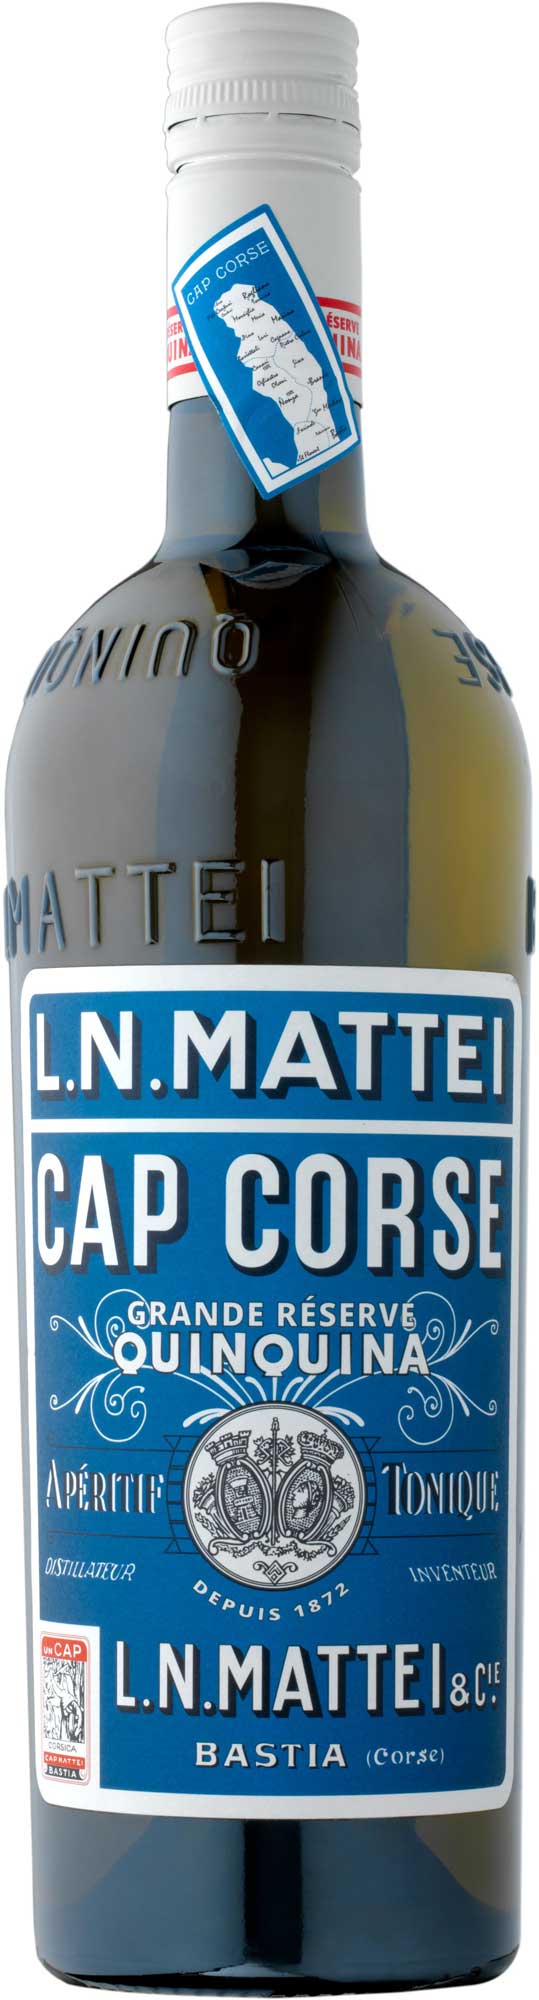 L.N. Mattei Cap Corse Blanc Quinquina 750ml-0